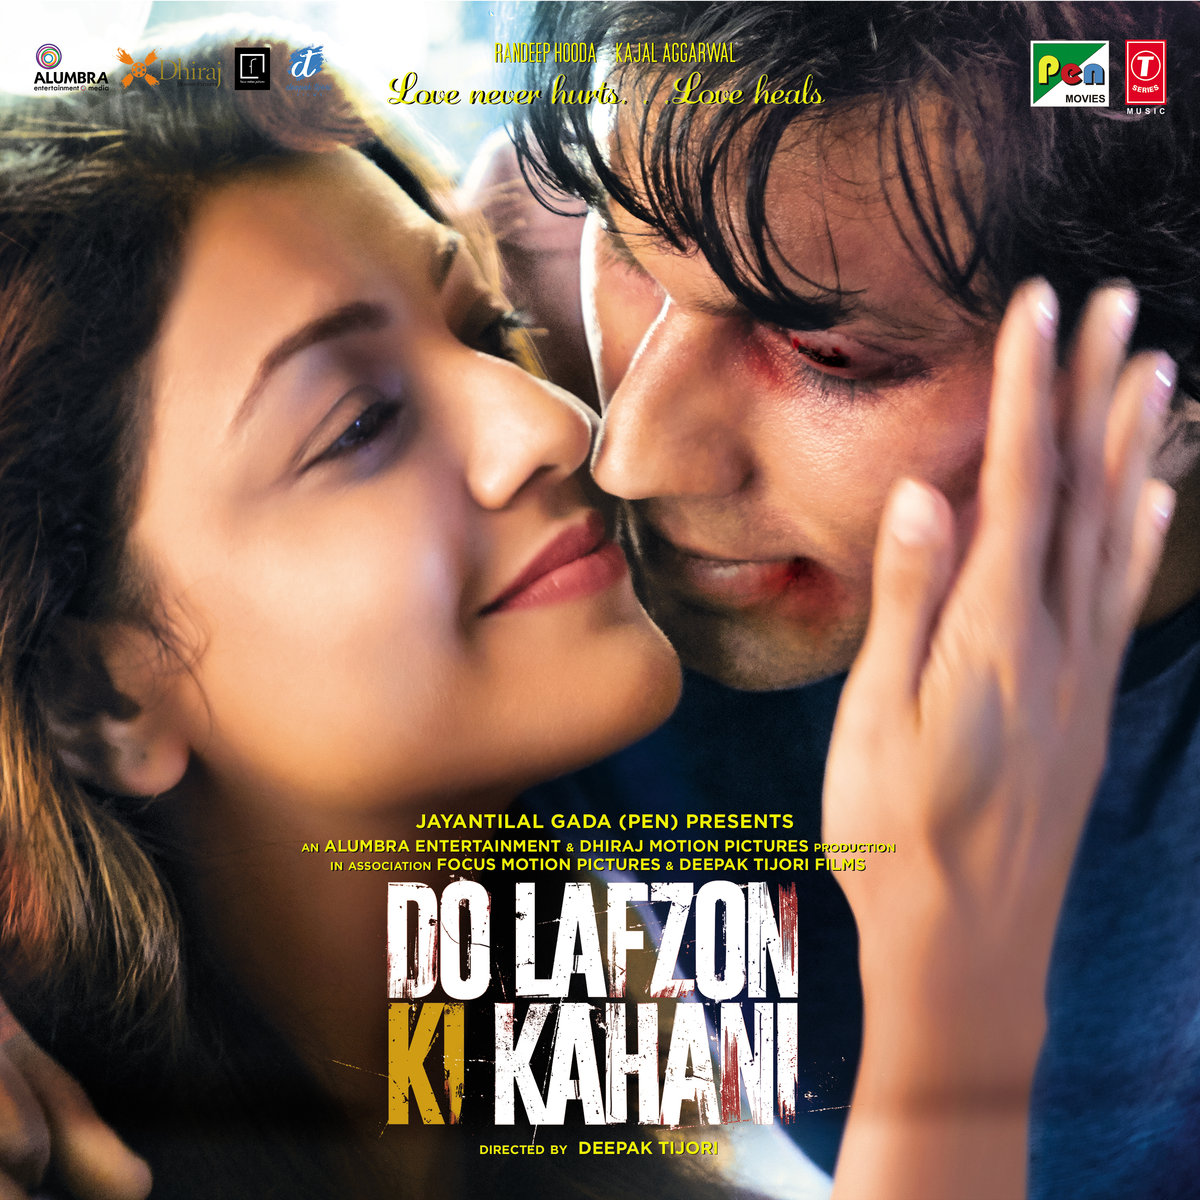 Jaan tere naam full movie download in hindi hd